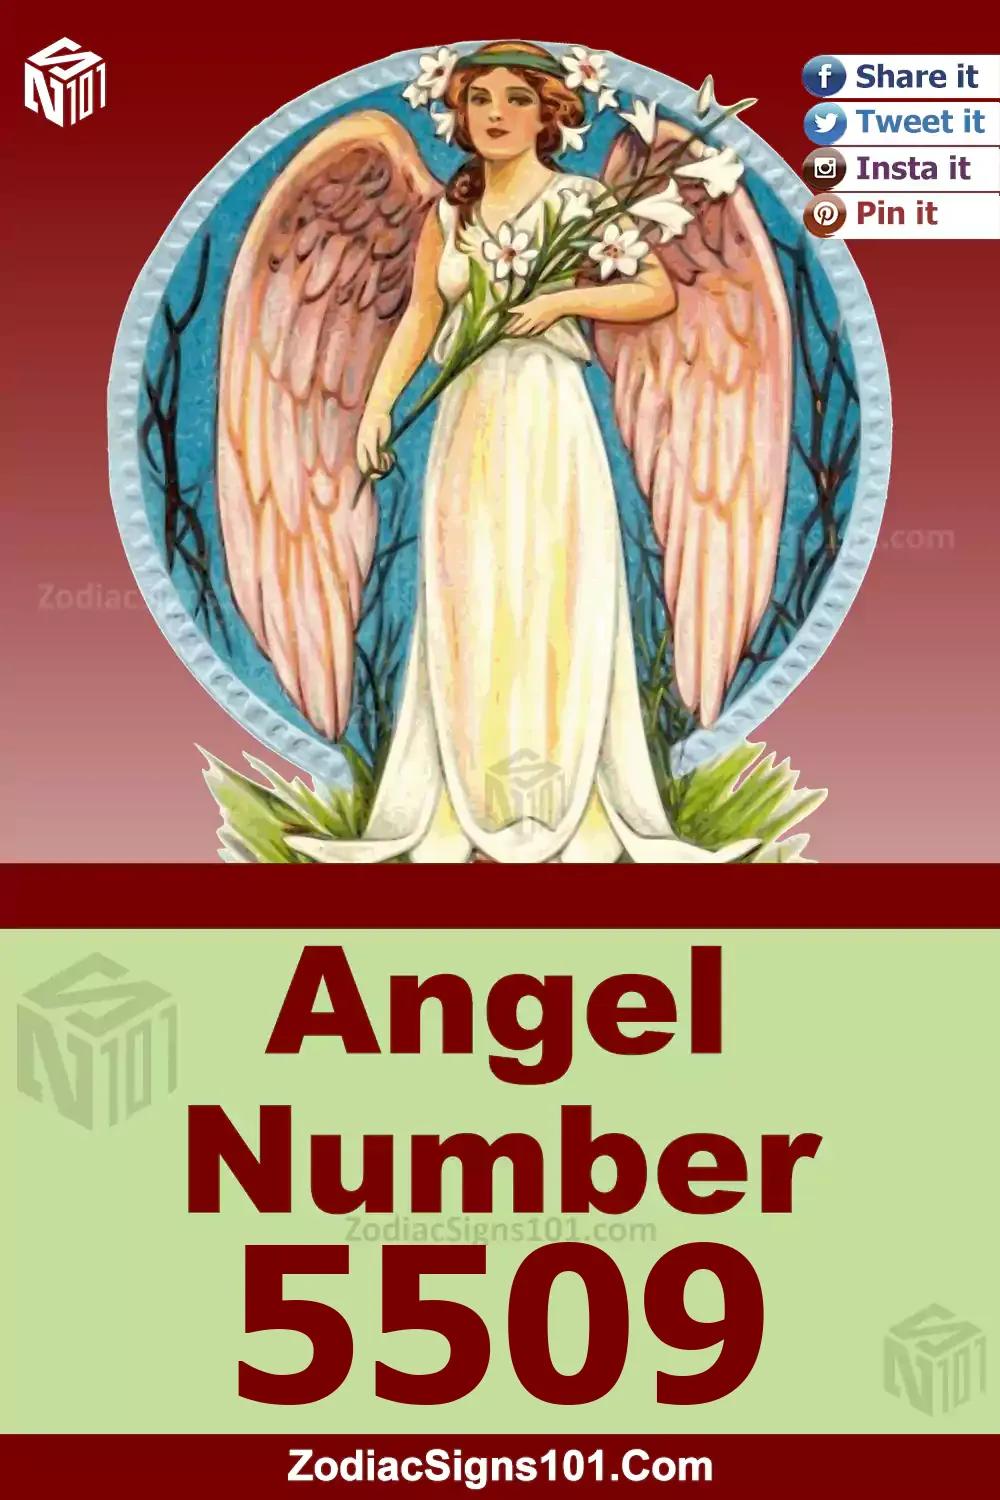 5509-Angel-Number-Meaning.jpg